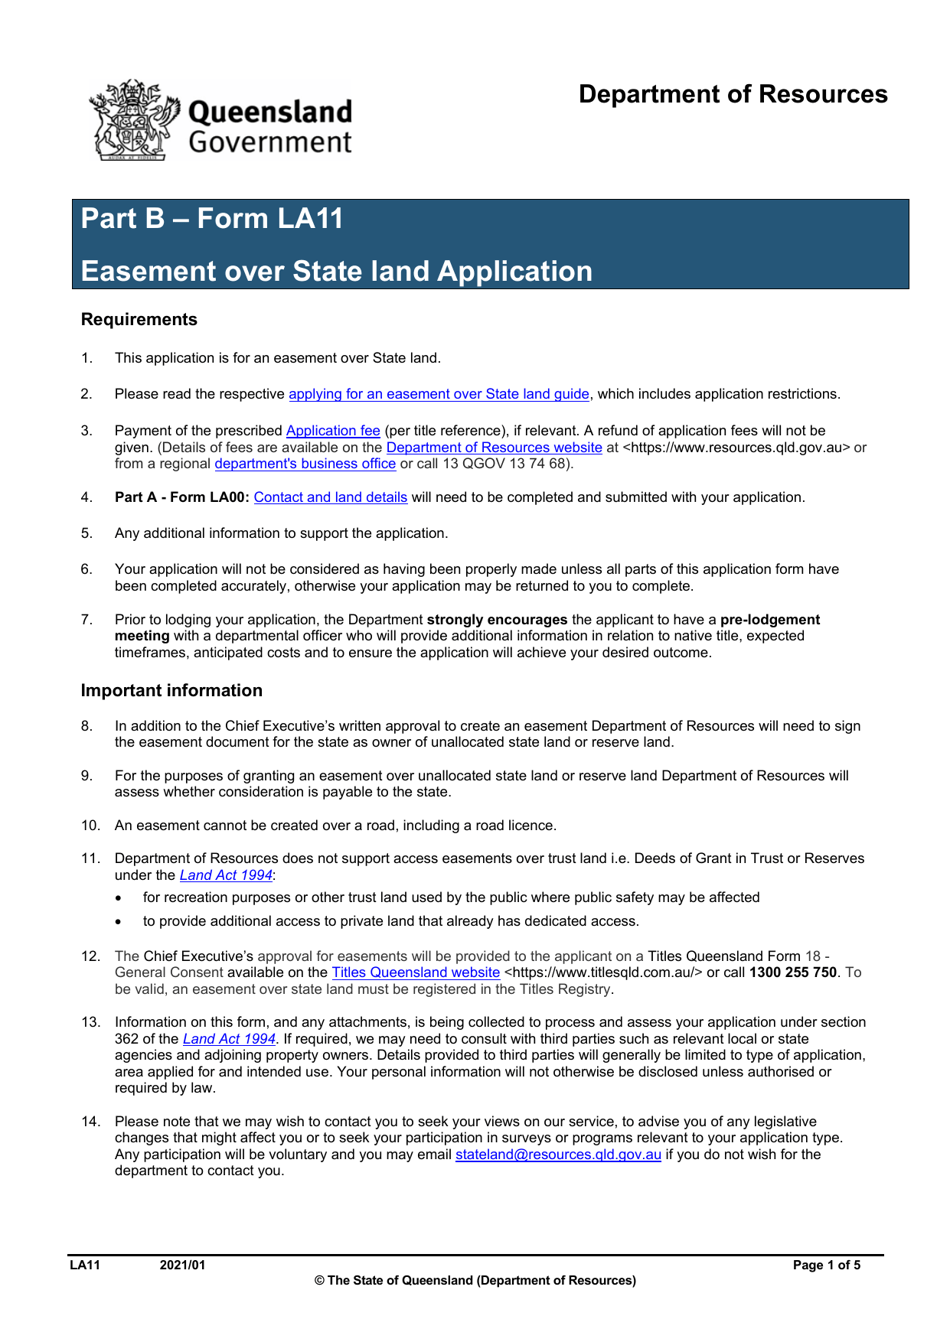 Form LA11 Part B Easement Over State Land Application - Queensland, Australia, Page 1